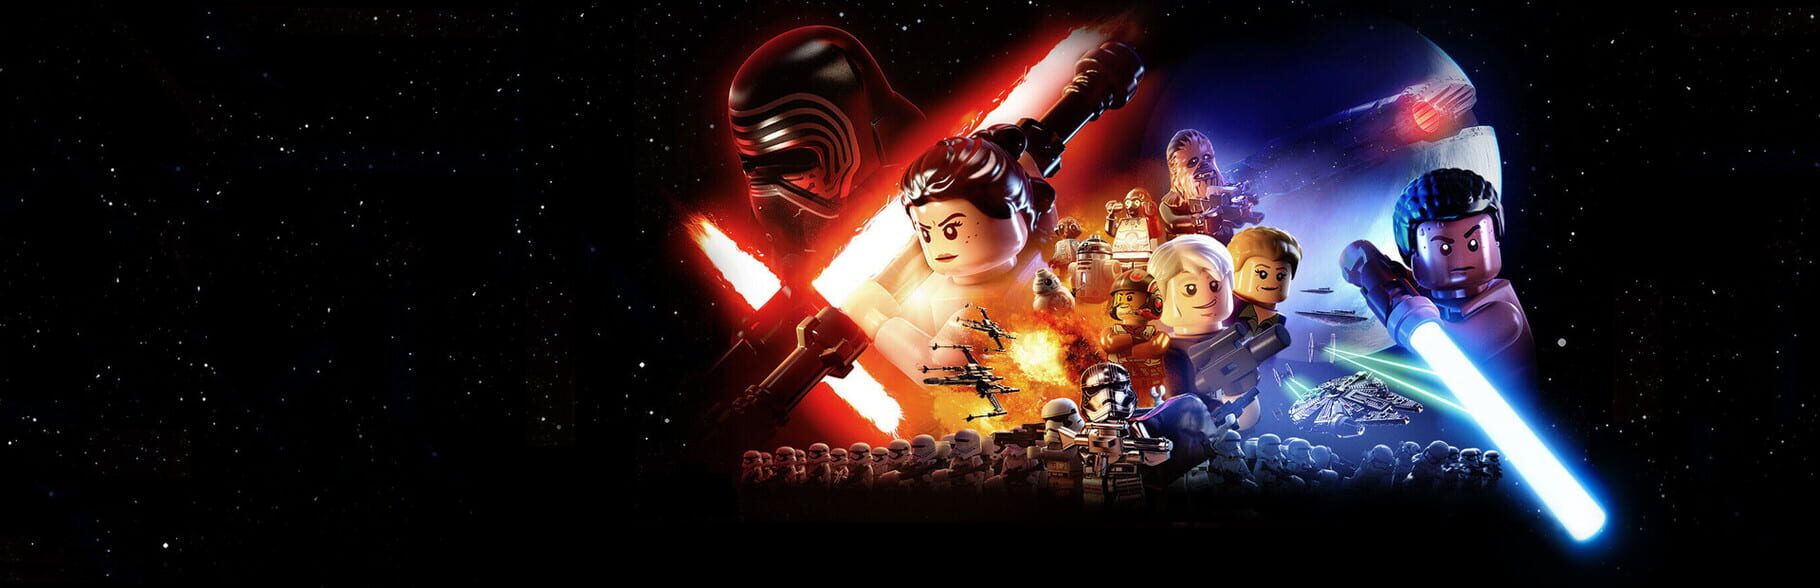 Arte - LEGO Star Wars: The Force Awakens